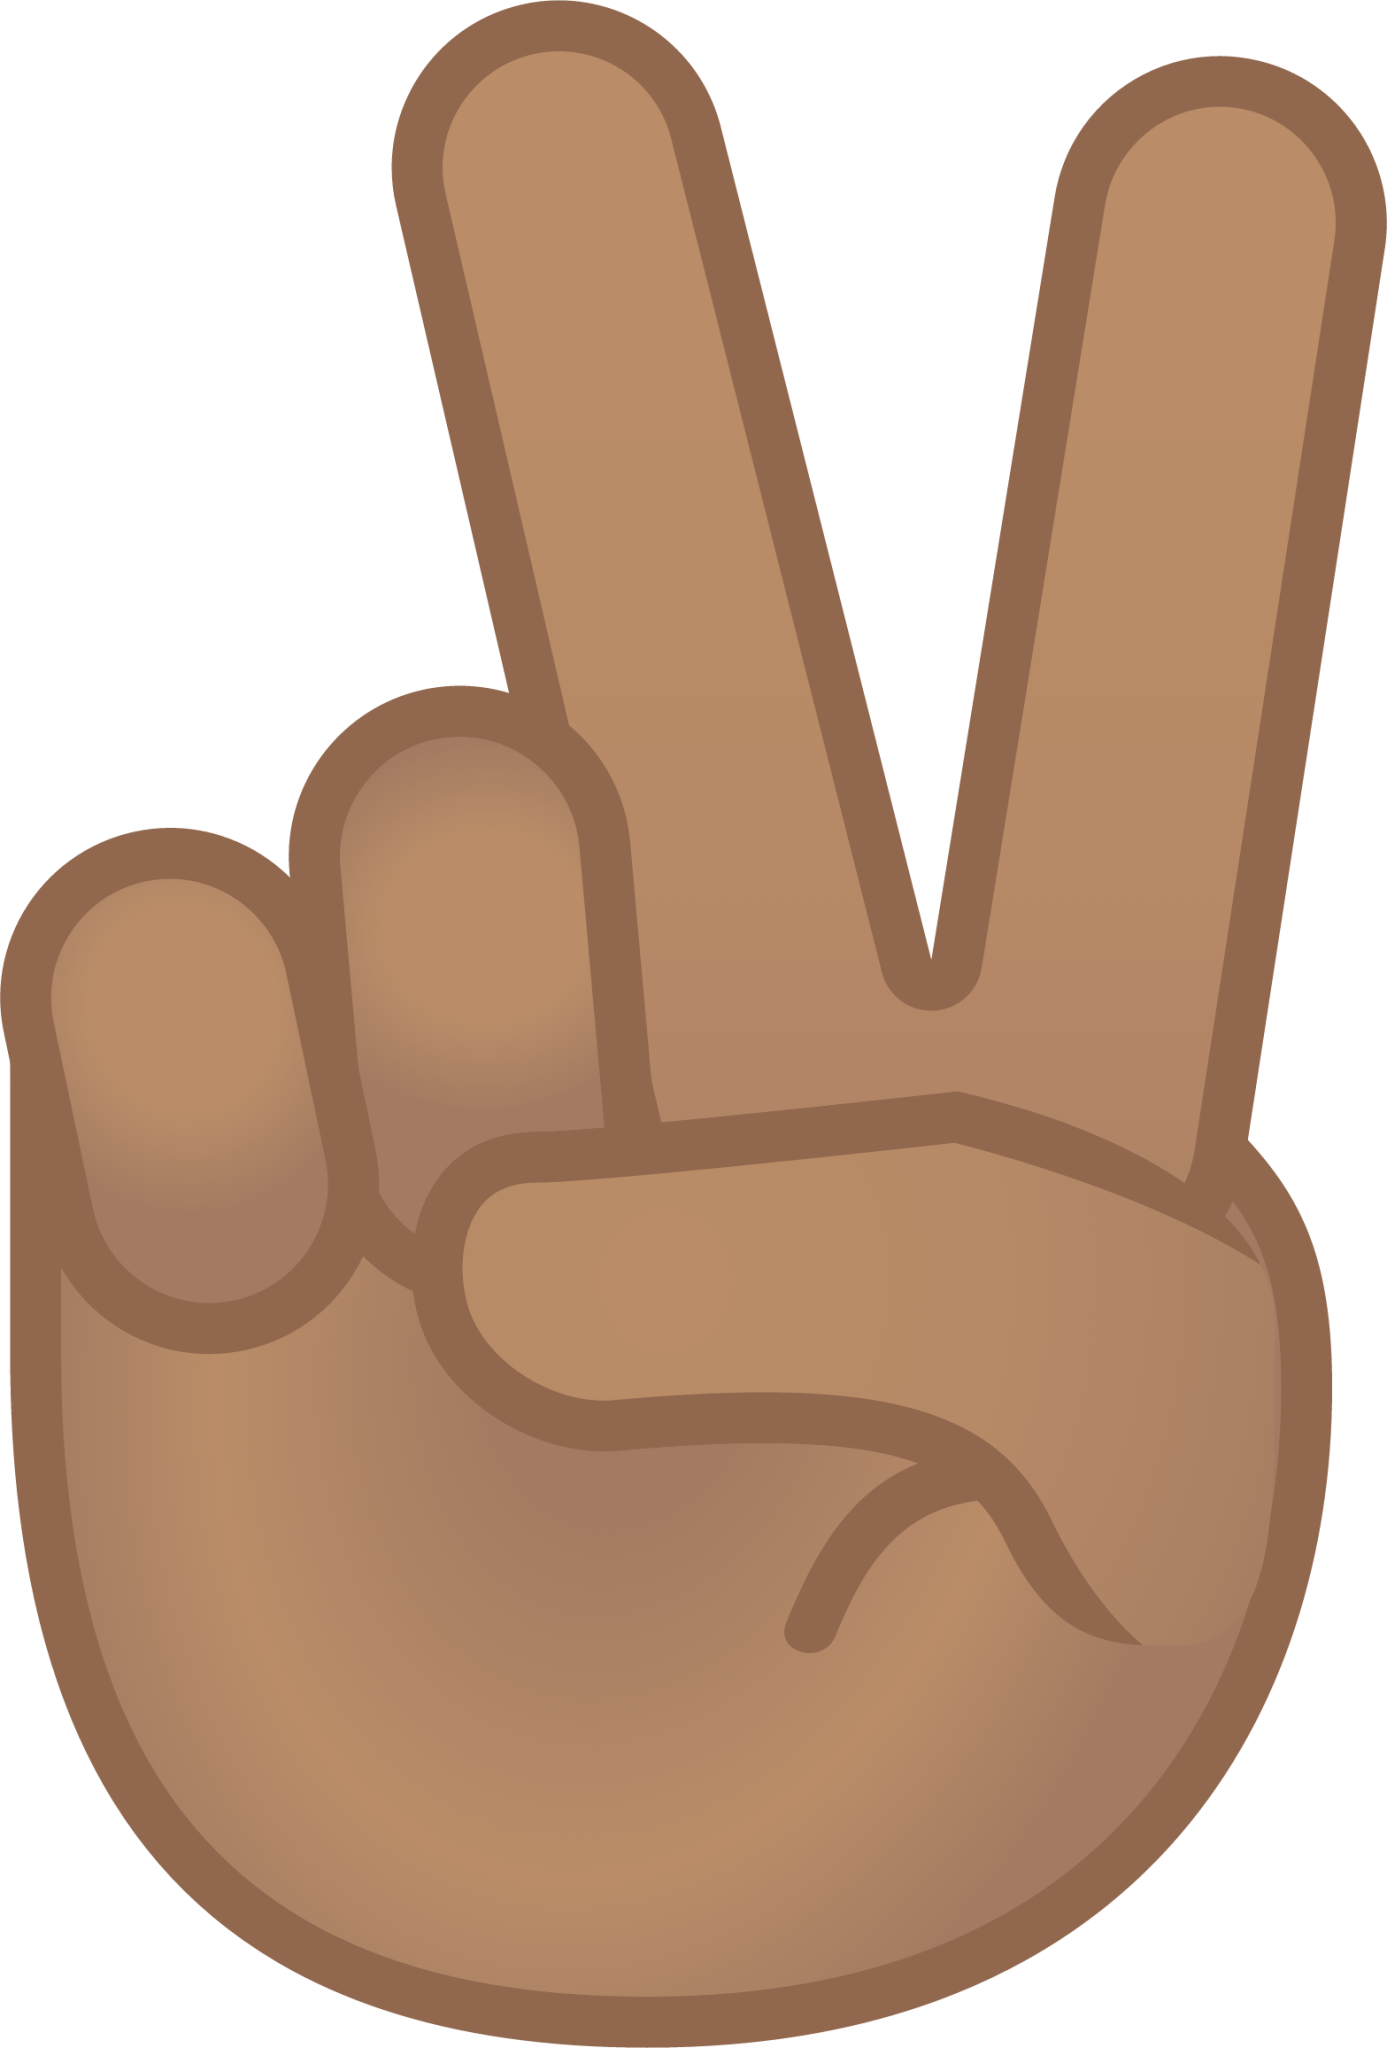 victory hand: medium skin tone emoji